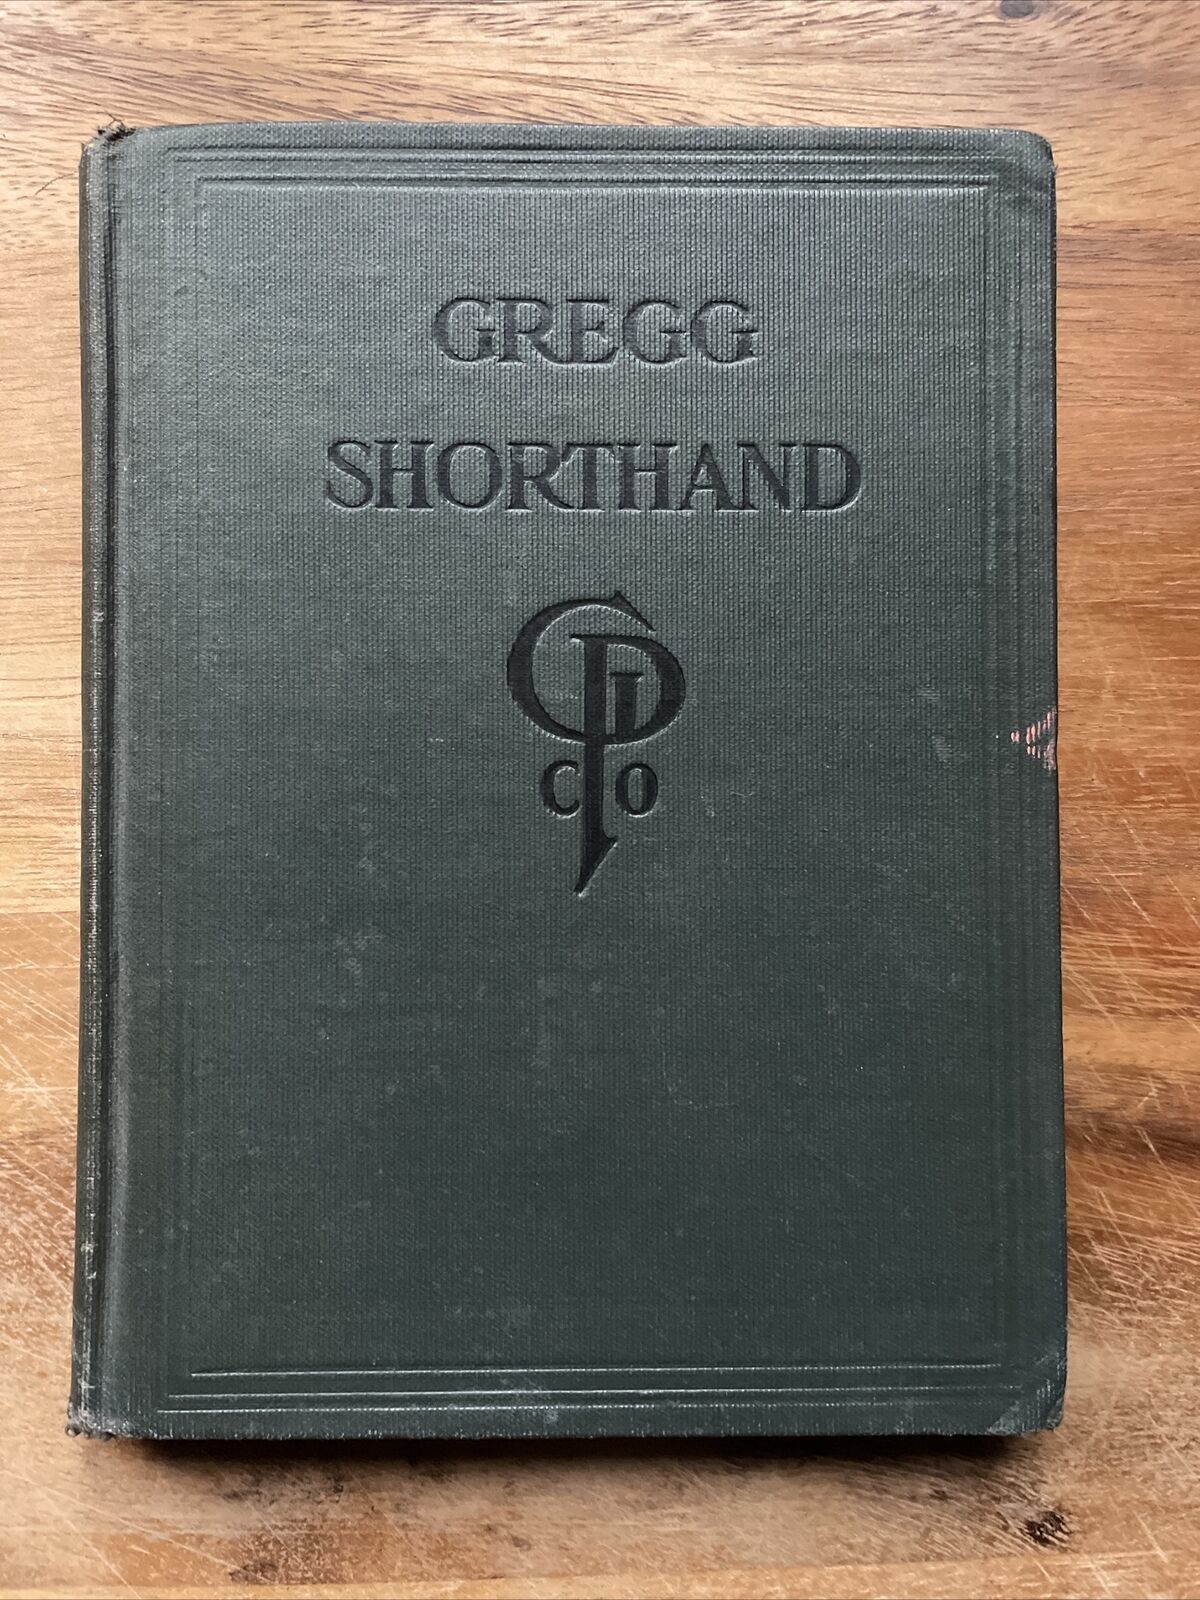 Gregg Shorthand book image